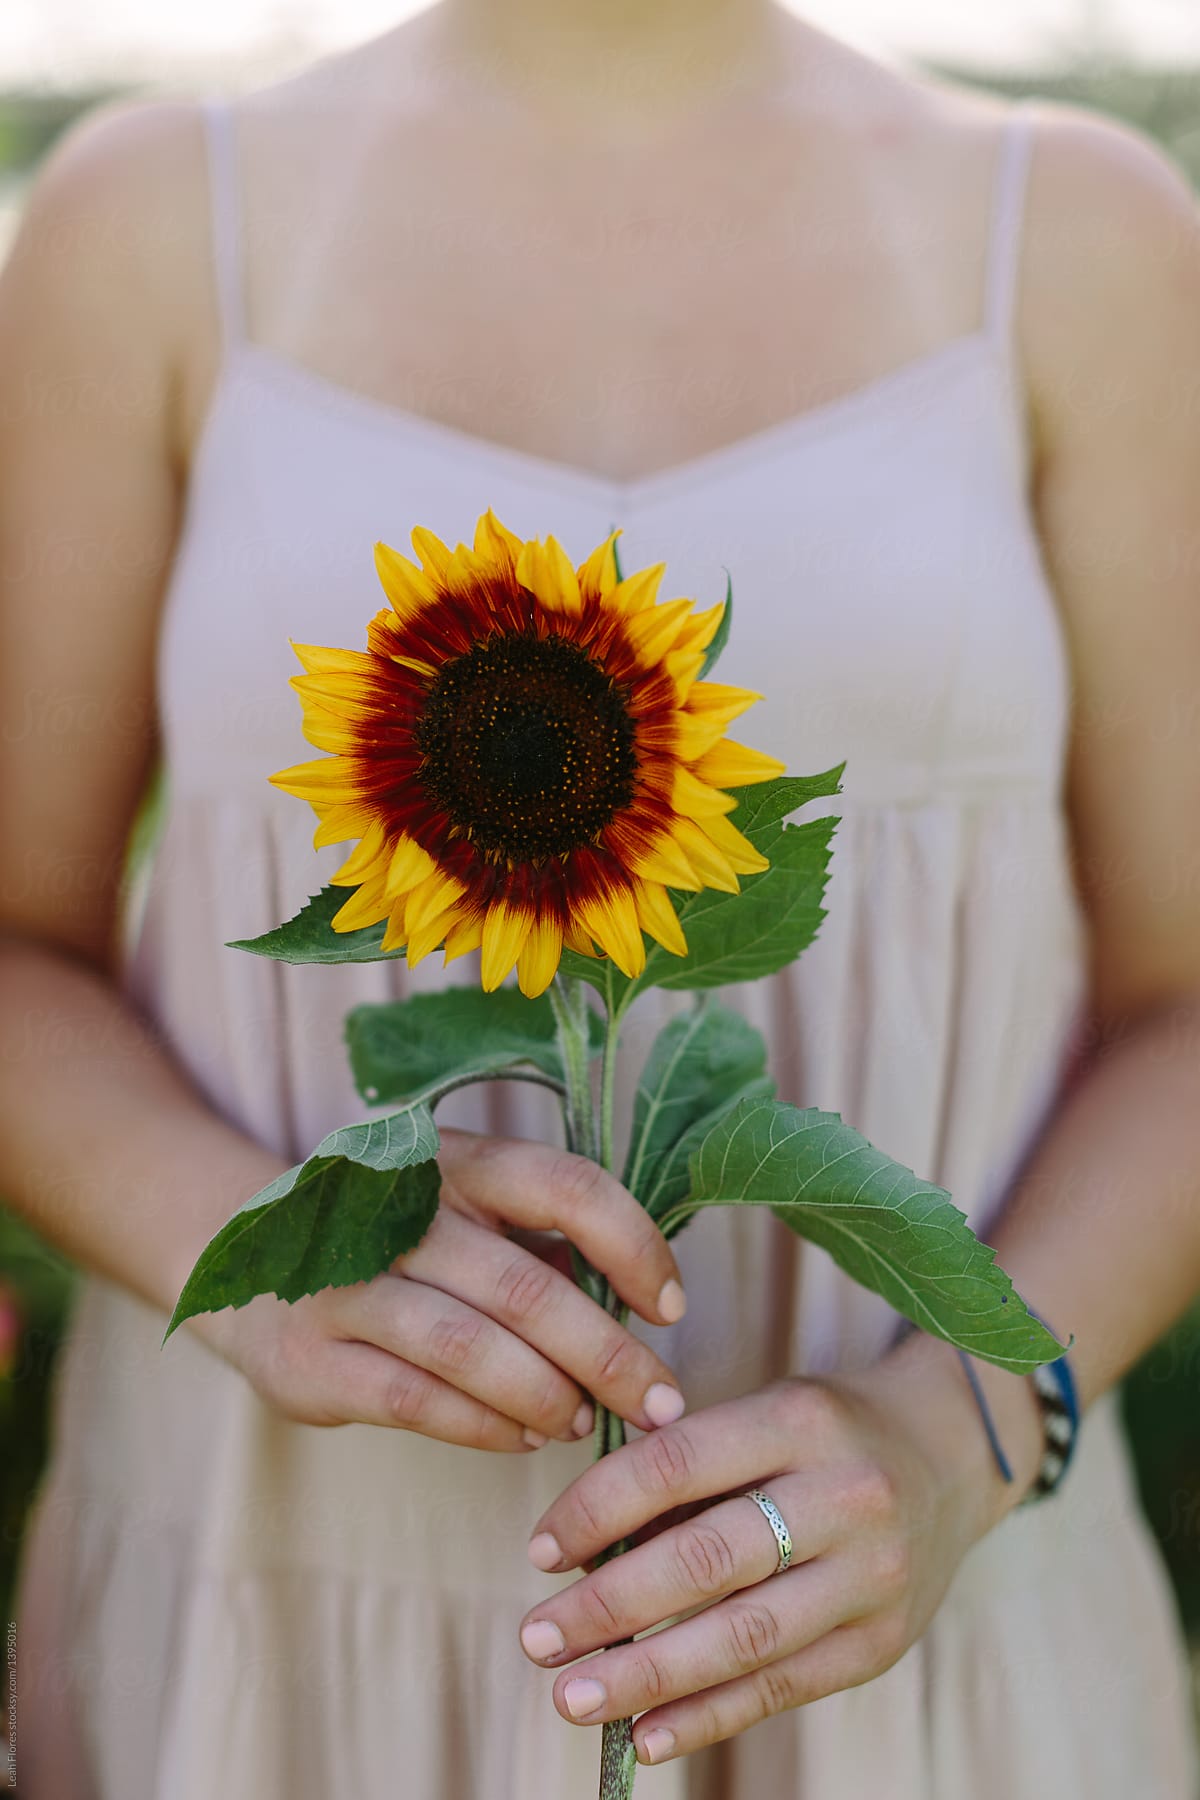 Woman Holding Sunflower